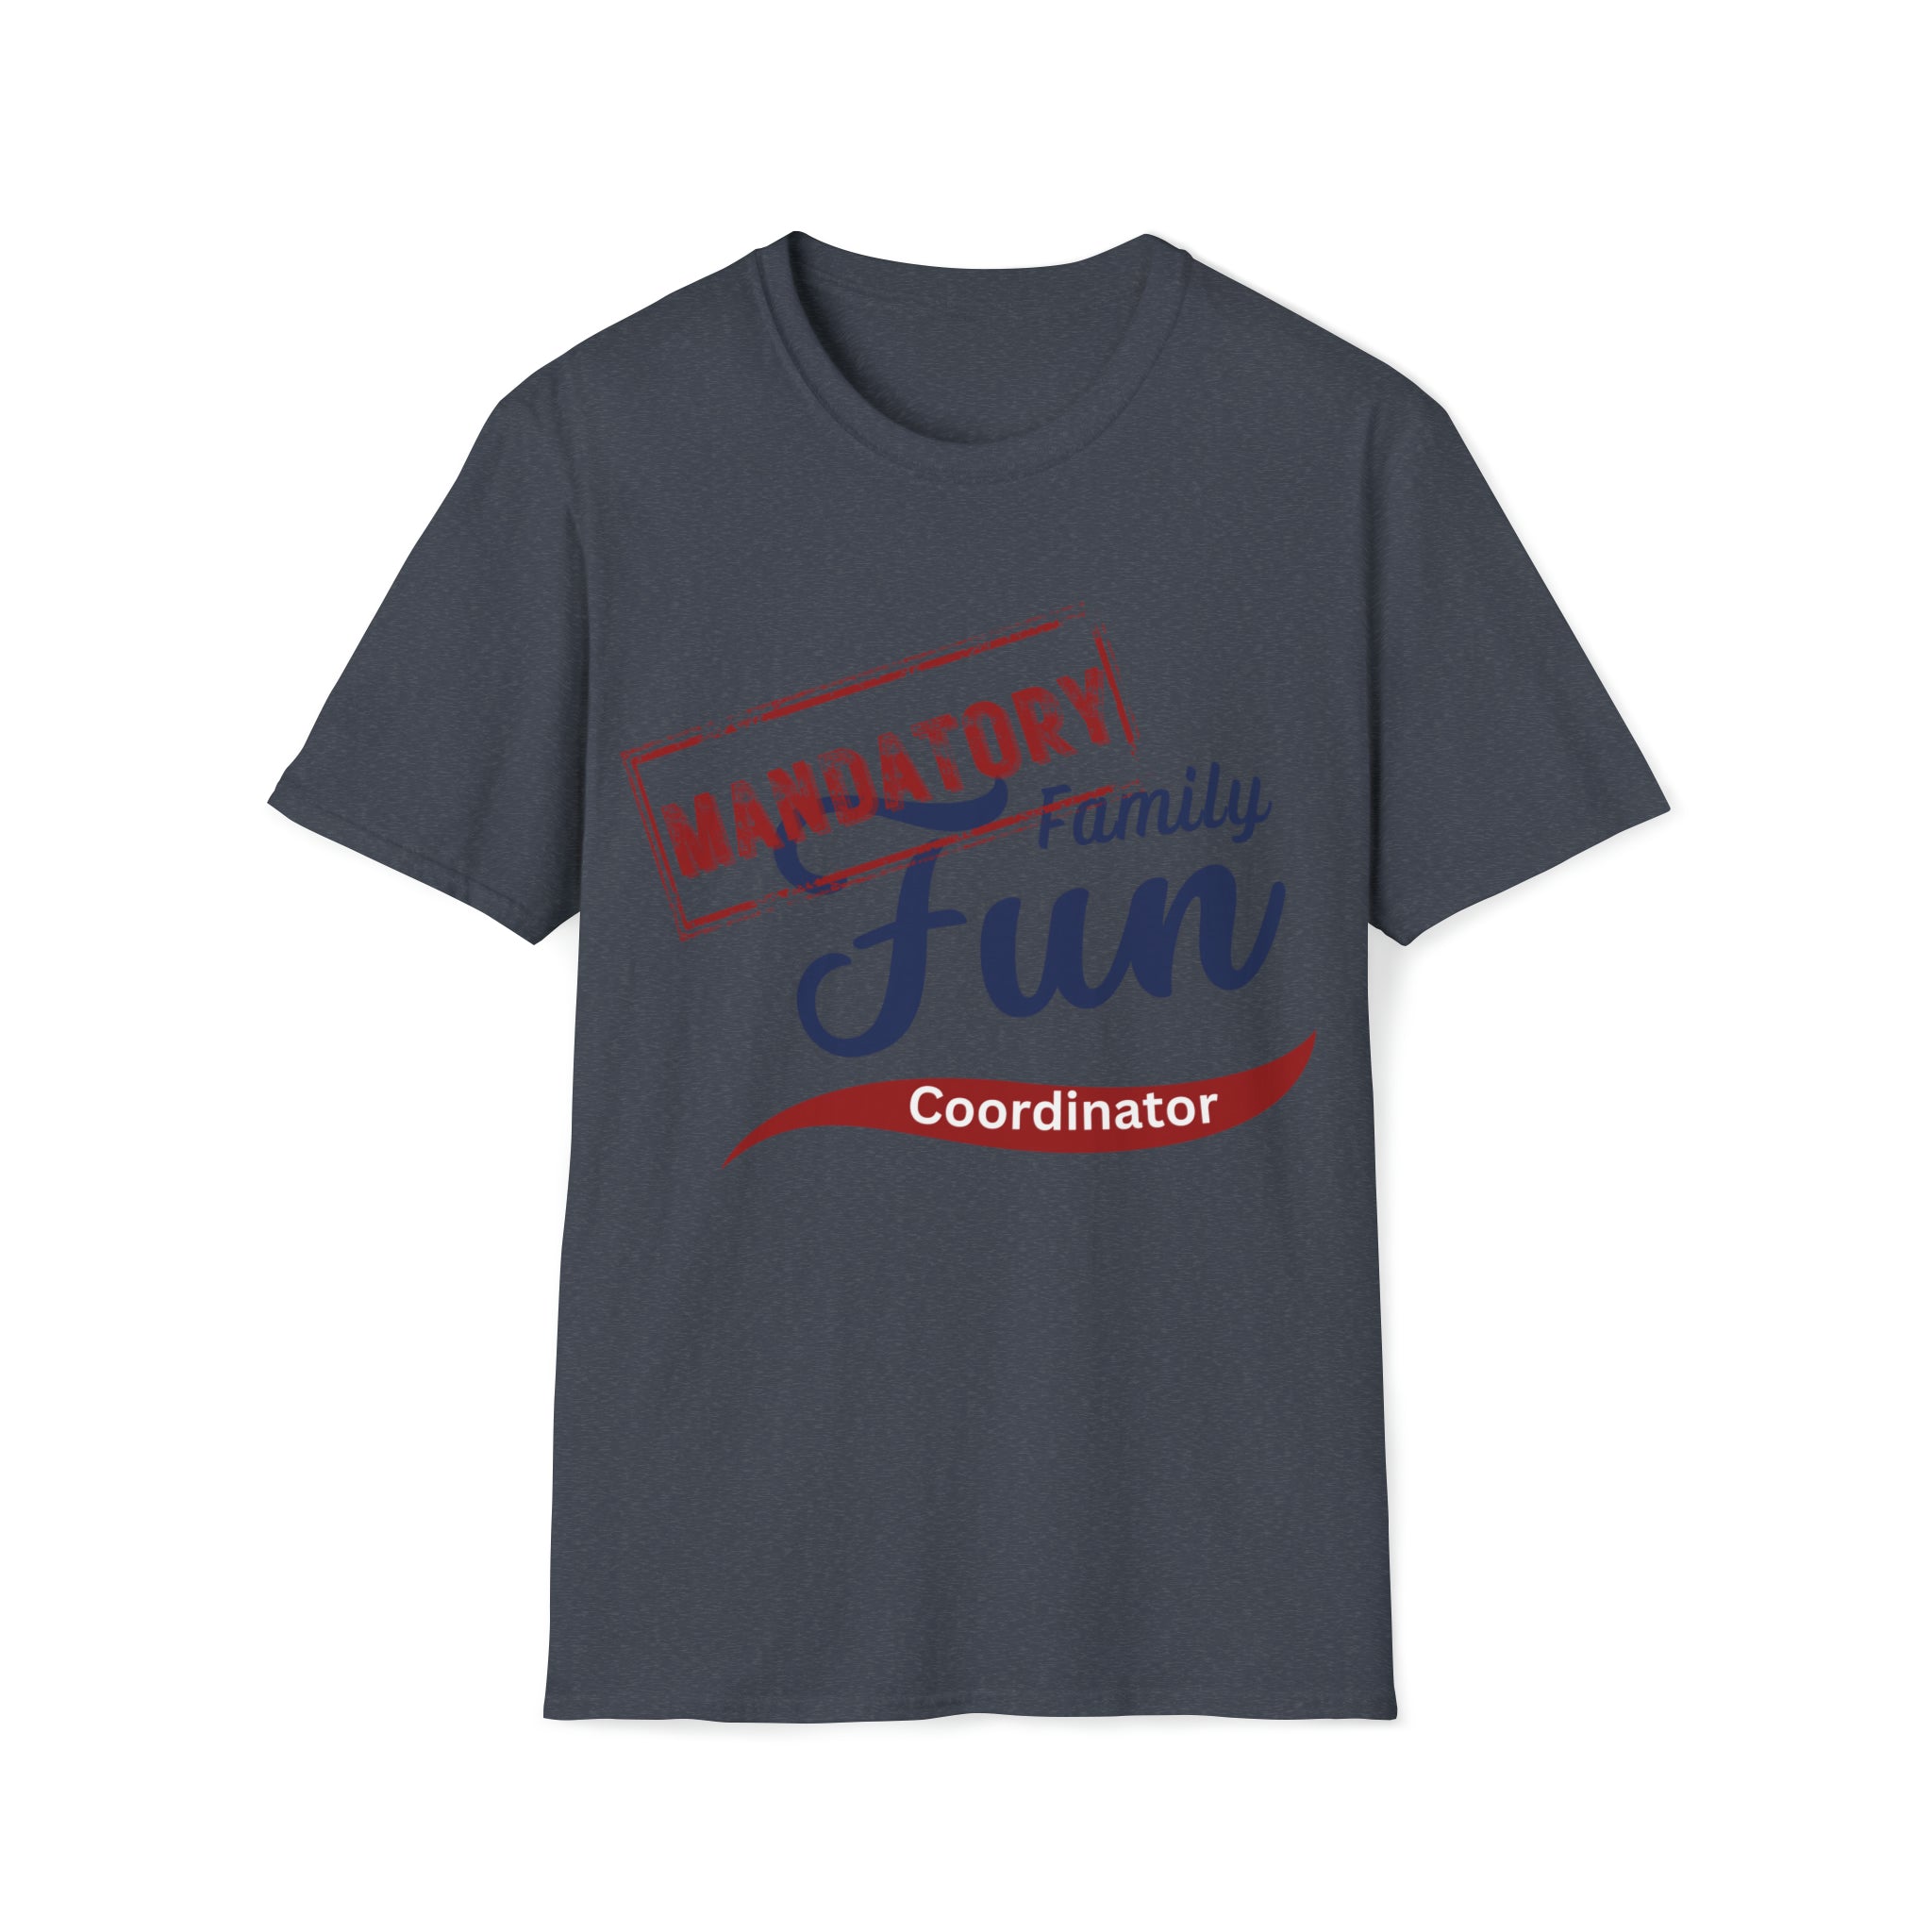 Mandatory Family Fun Coordinator - Men's Unisex Softstyle T-Shirt